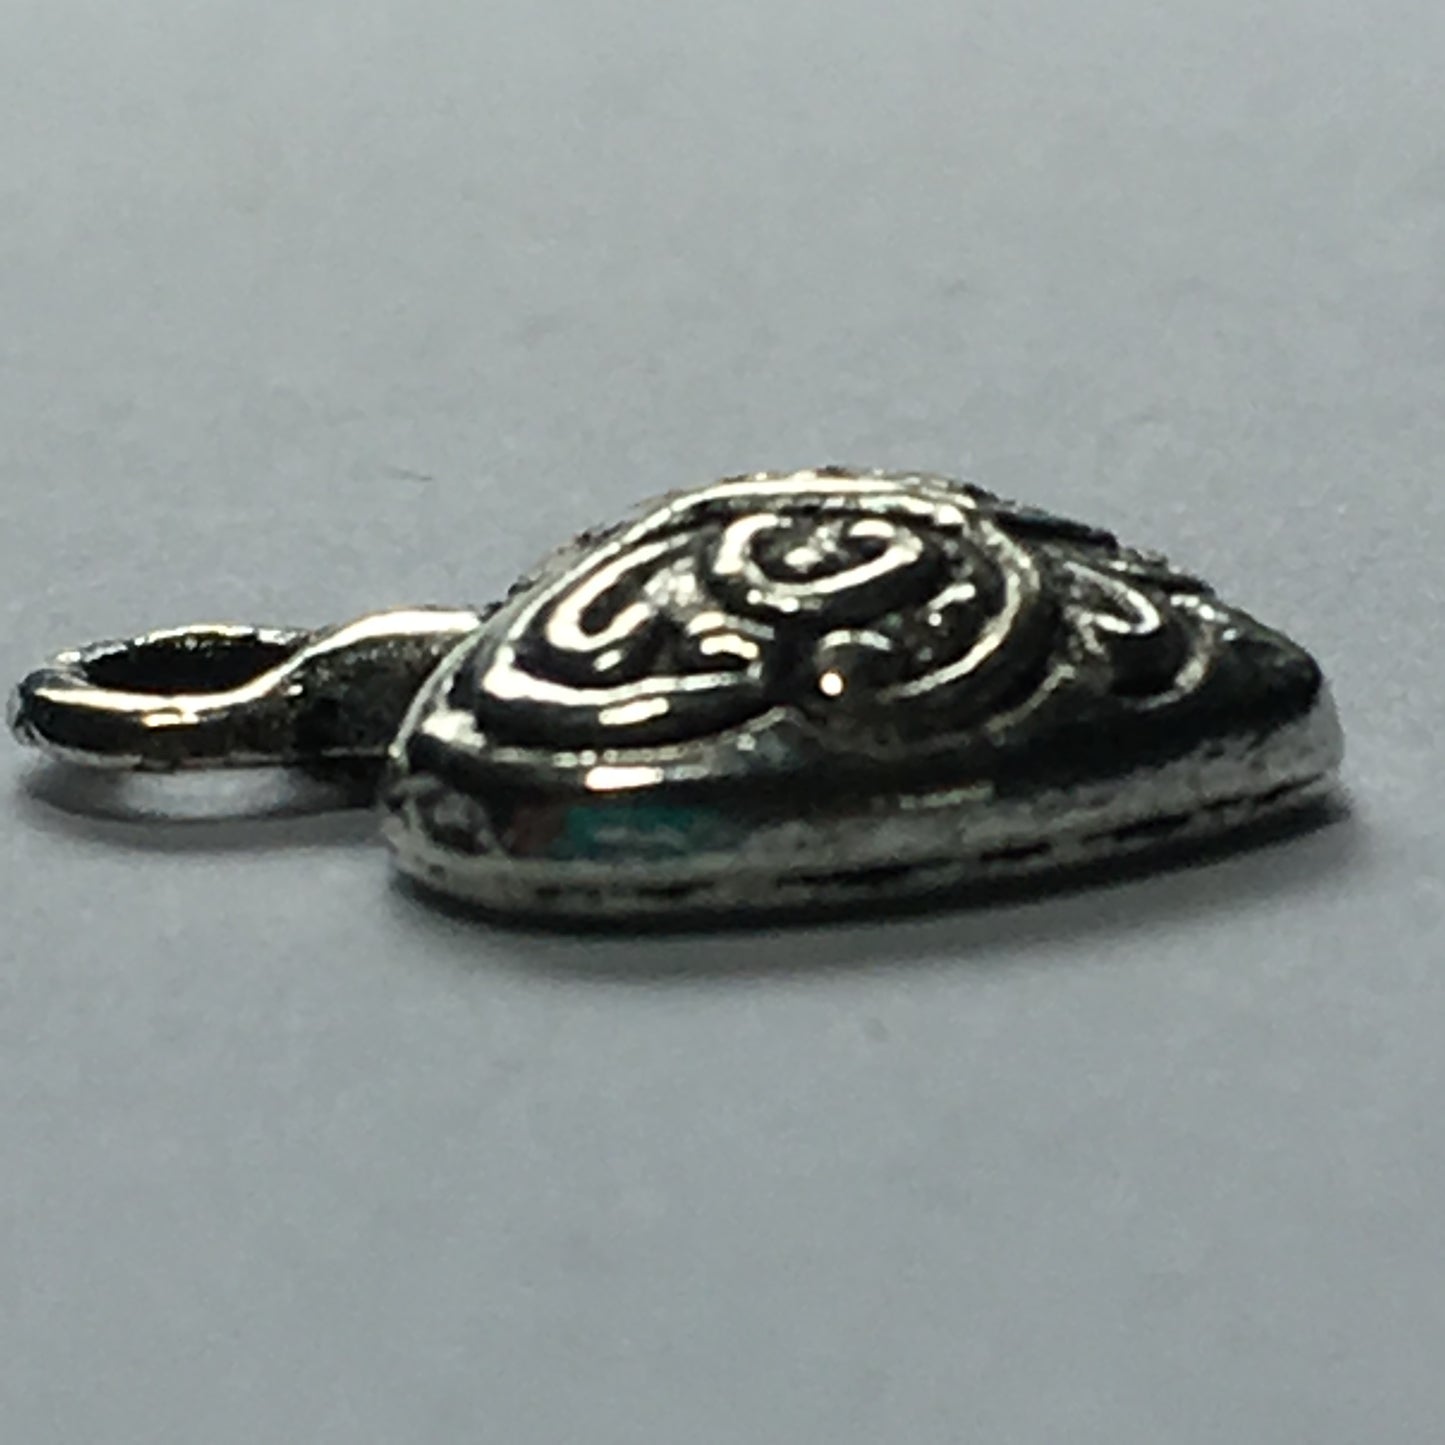 Antique Silver Heart Charm, 15 x 10 mm